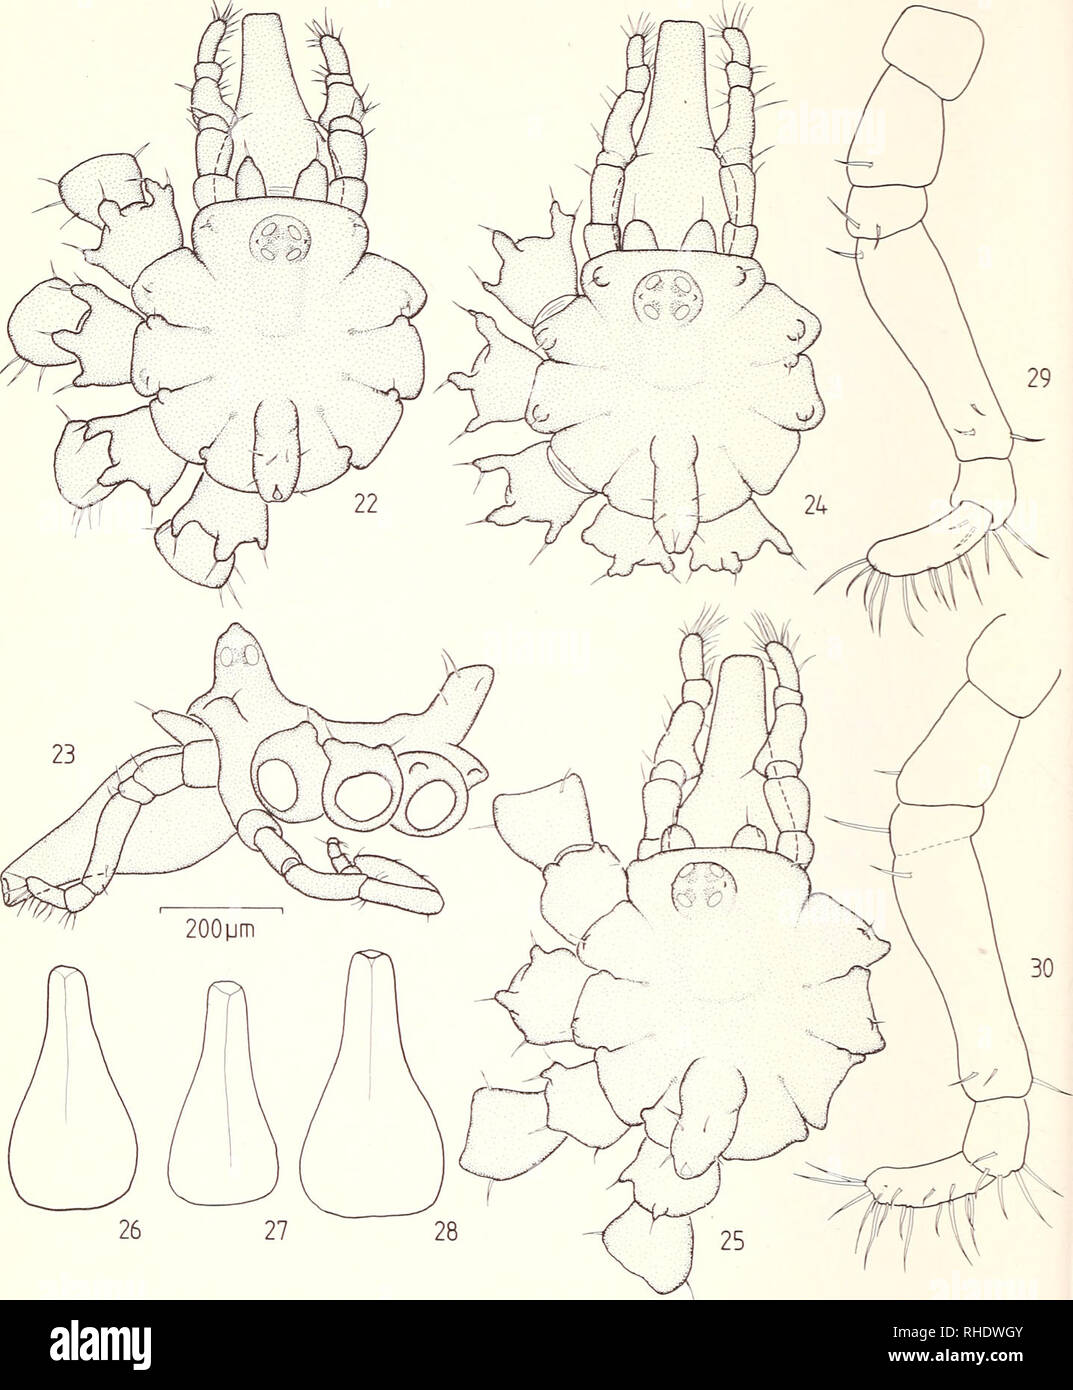 . Bonner zoologische Beiträge : Herausgeber: Zoologisches Forschungsinstitut und Museum Alexander Koenig, Bonn. Biology; Zoology. 134 H.-G. Müller. Figs. 22 — 30: Tanystylum rehderi Child, 1970: 22) o*, dorsal view; 23) o*, lateral view; 24) other o% dorsal view; 25) 9, dorsal view; 26) o*, proboscis; o* from Palau, Caroline Islands, proboscis (Smithsonian Institution, Washington, USNM 195385); 28) 9, proboscis; 29) o*, palp with distinct suture line between 3rd and 4th segment; 30) other cr, palp with indistinct suture line between 3 rd and 4th segment.. Please note that these images are extr Stock Photo